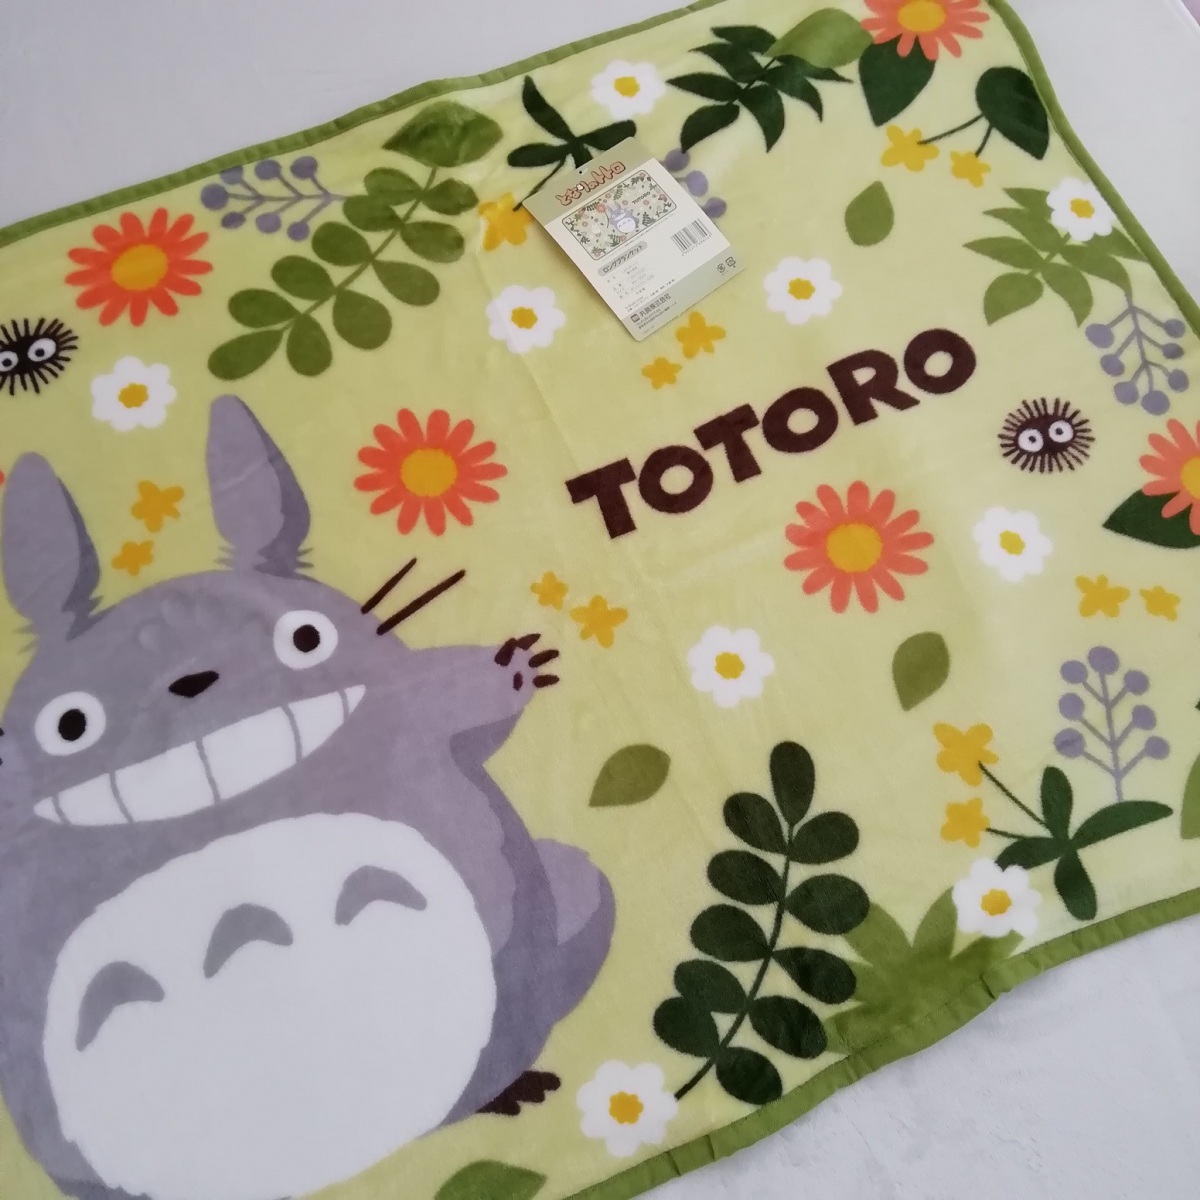  Marushin Ghibli Tonari no Totoro покрывало на колени одеяло 80×150cm длинный размер весна. . дуть 